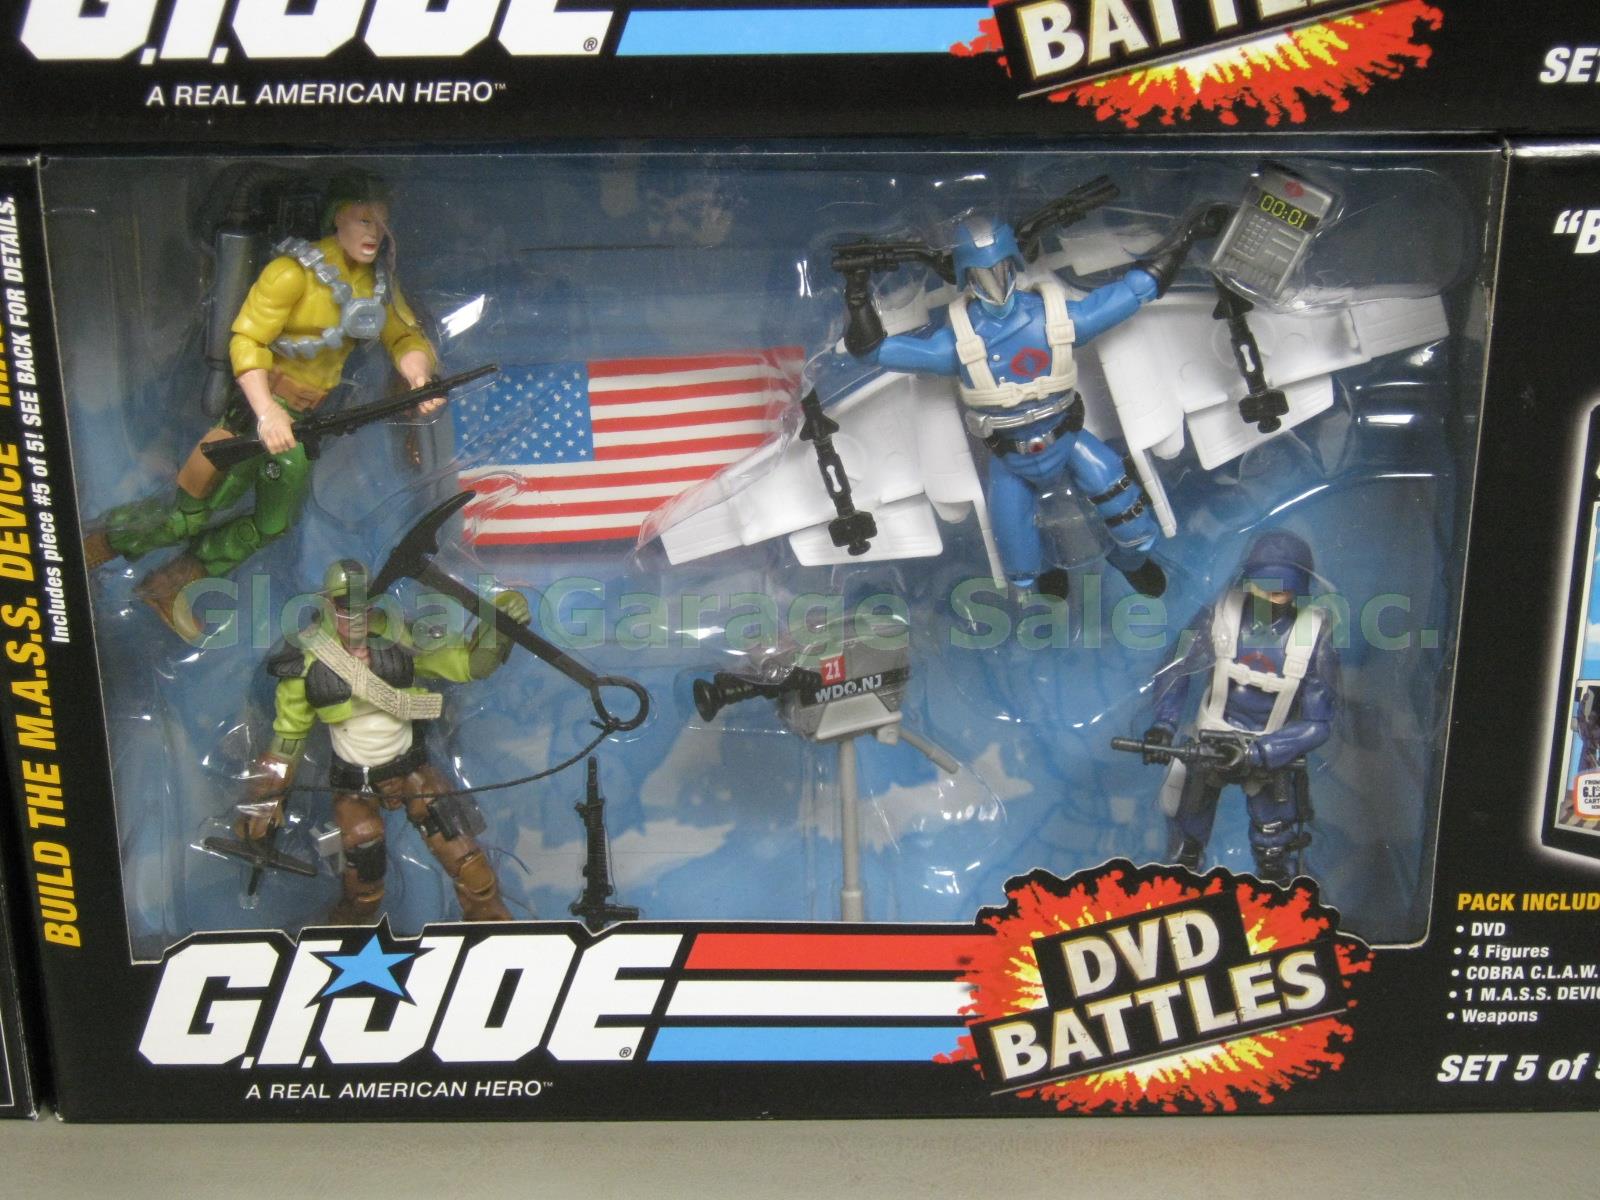 New 25th Anniversary GI Joe DVD Battles Set Lot 1 2 3 4 + 5 Alpine Best Of 